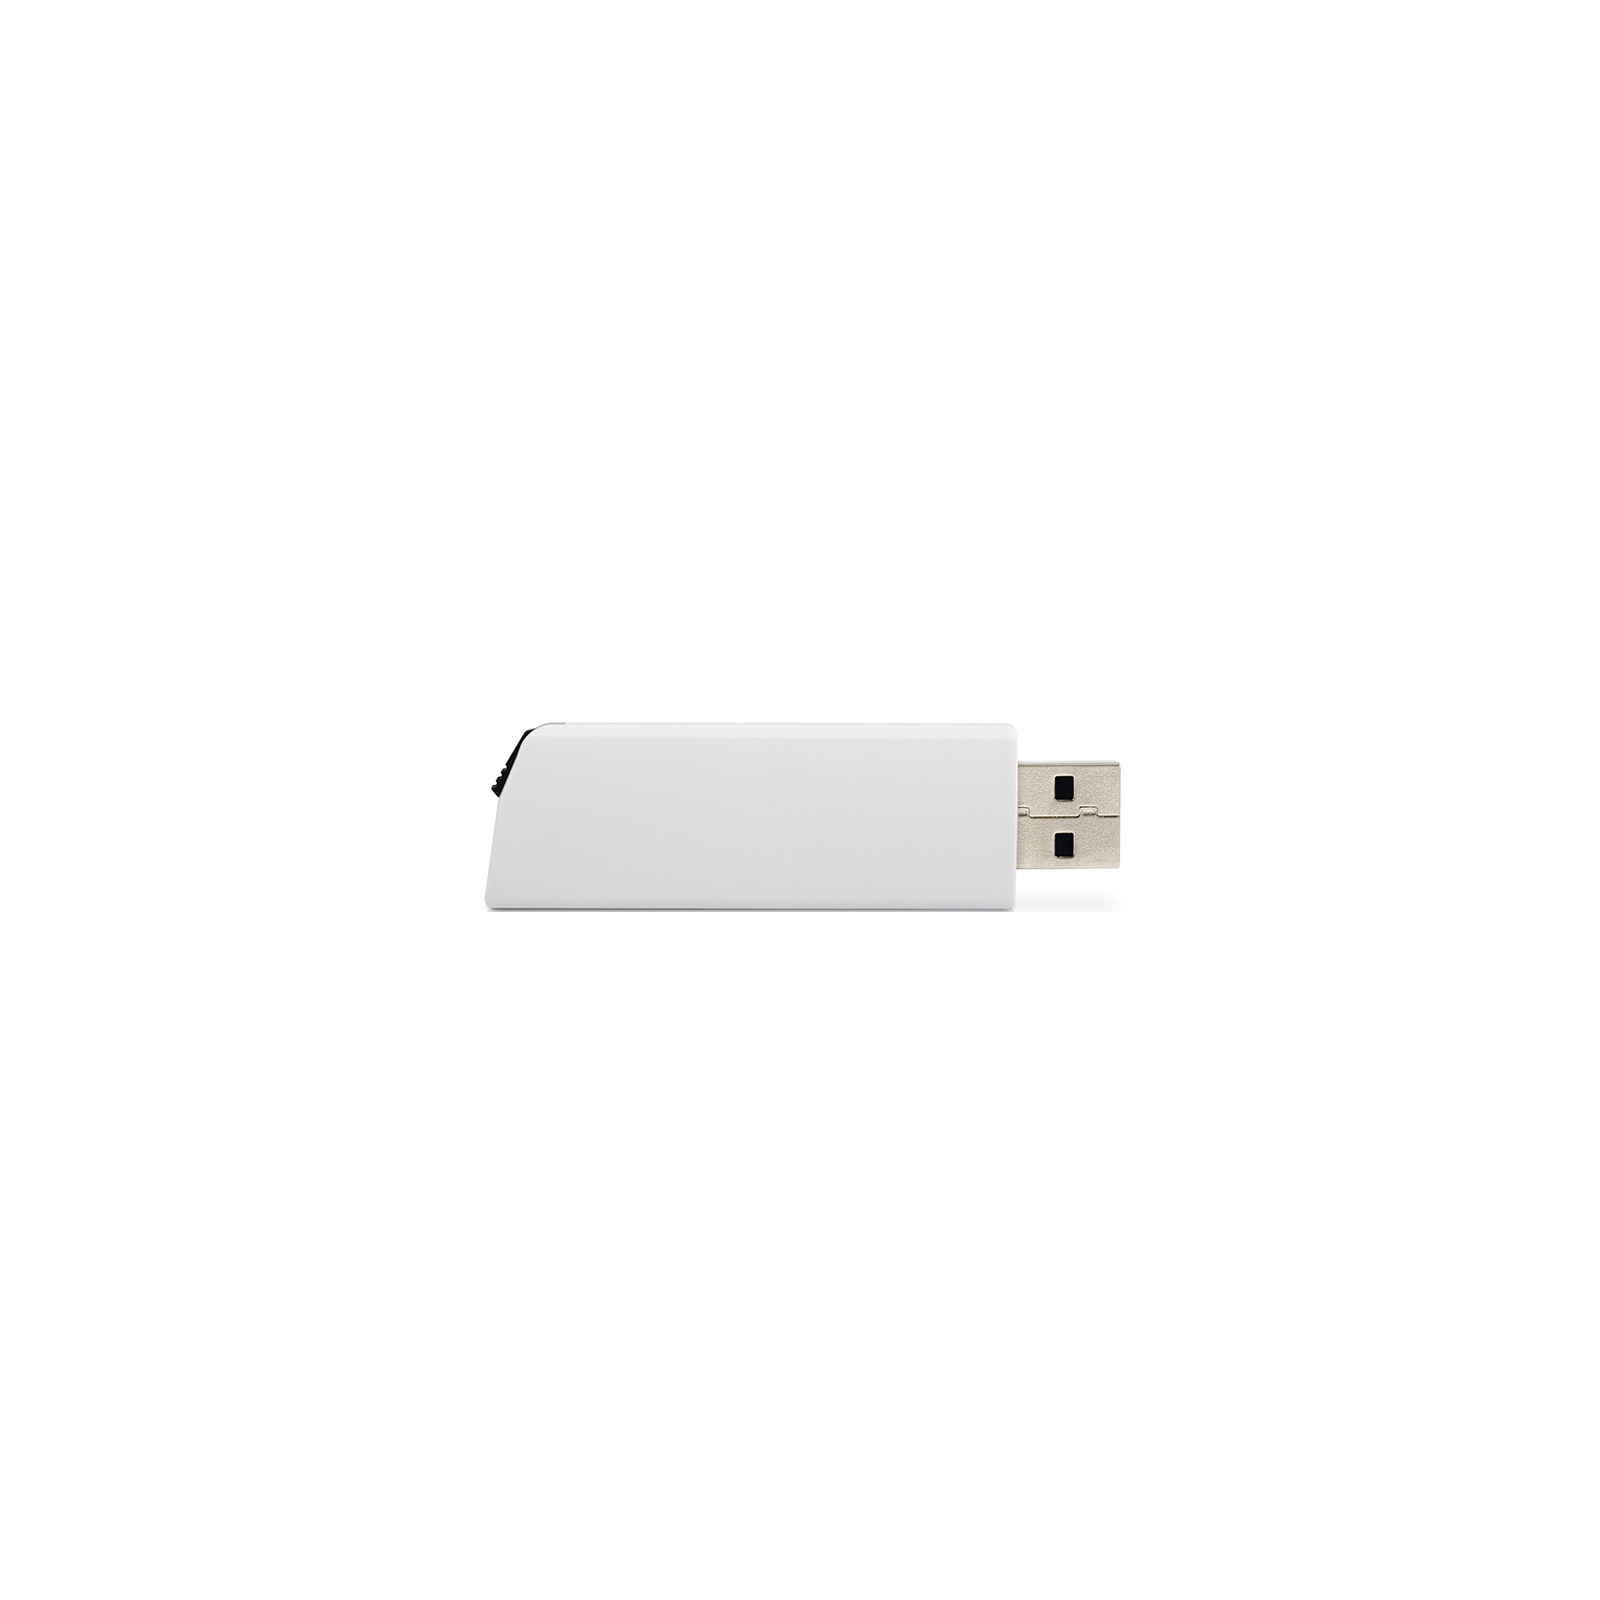 USB флеш накопитель Goodram 8GB CL!CK White USB 2.0 (PD4GH2GRCLWB) изображение 5